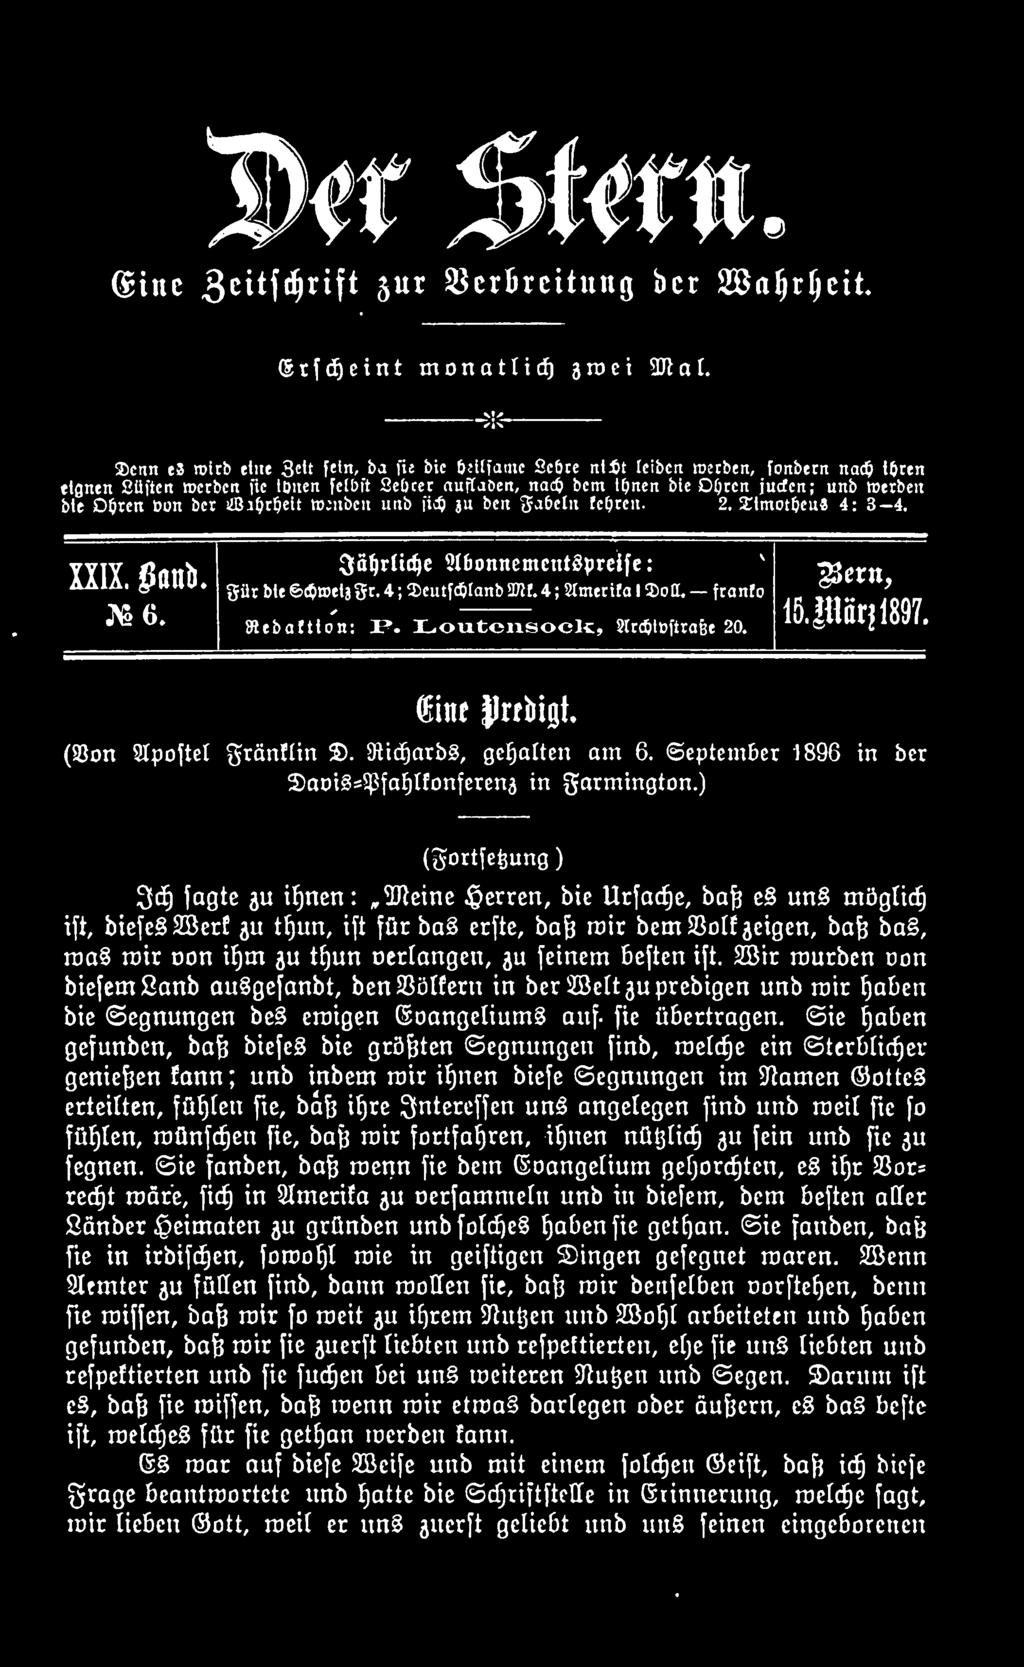 September 1896 in ber 2)aoi s^faf)tfonferen3 in garmingron.